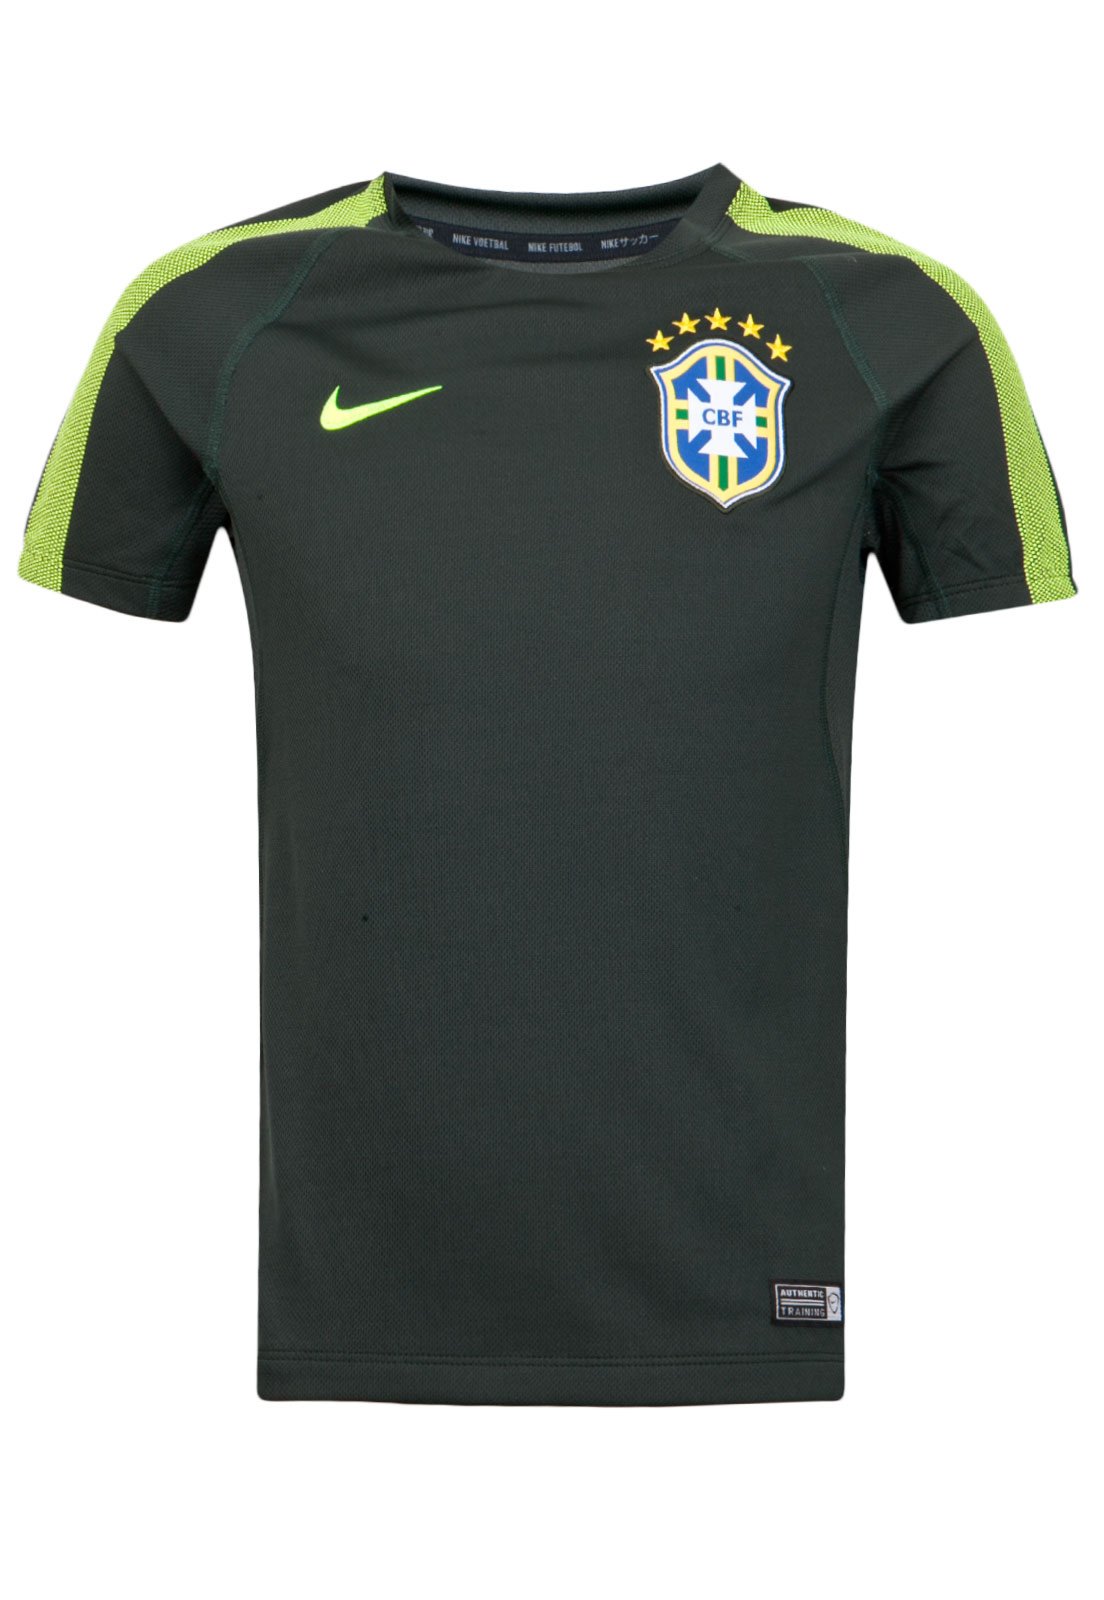 https://static.dafiti.com.br/p/Nike-Camiseta-Nike-Brasil-Treino-Infantil-Verde-1216-0990141-1-zoom.jpg